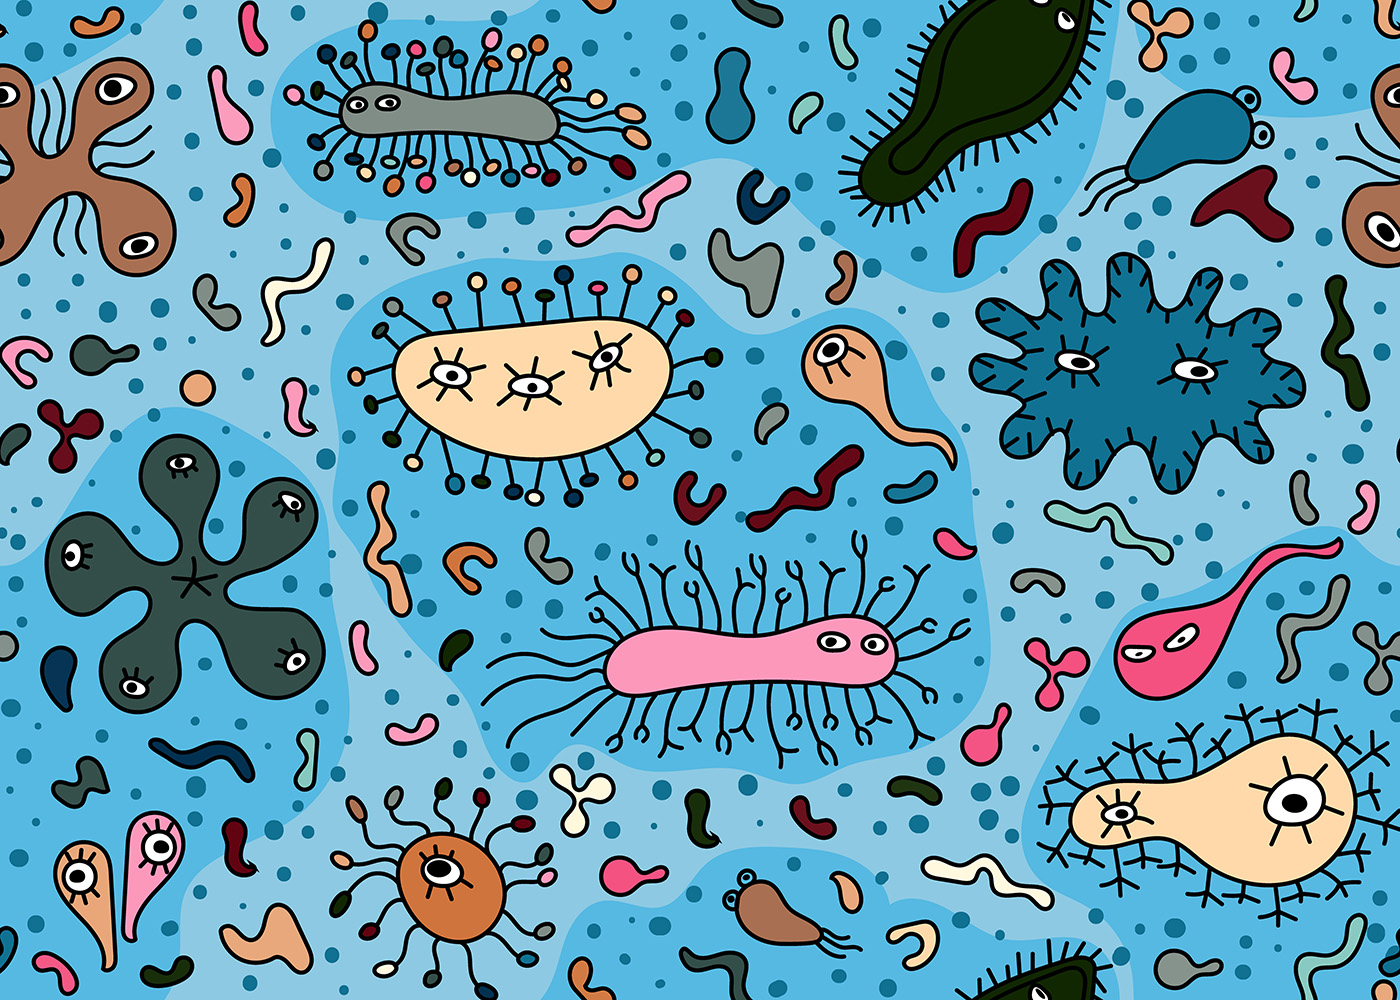 a hand-drawn cartoon illustration of ocean bacterium